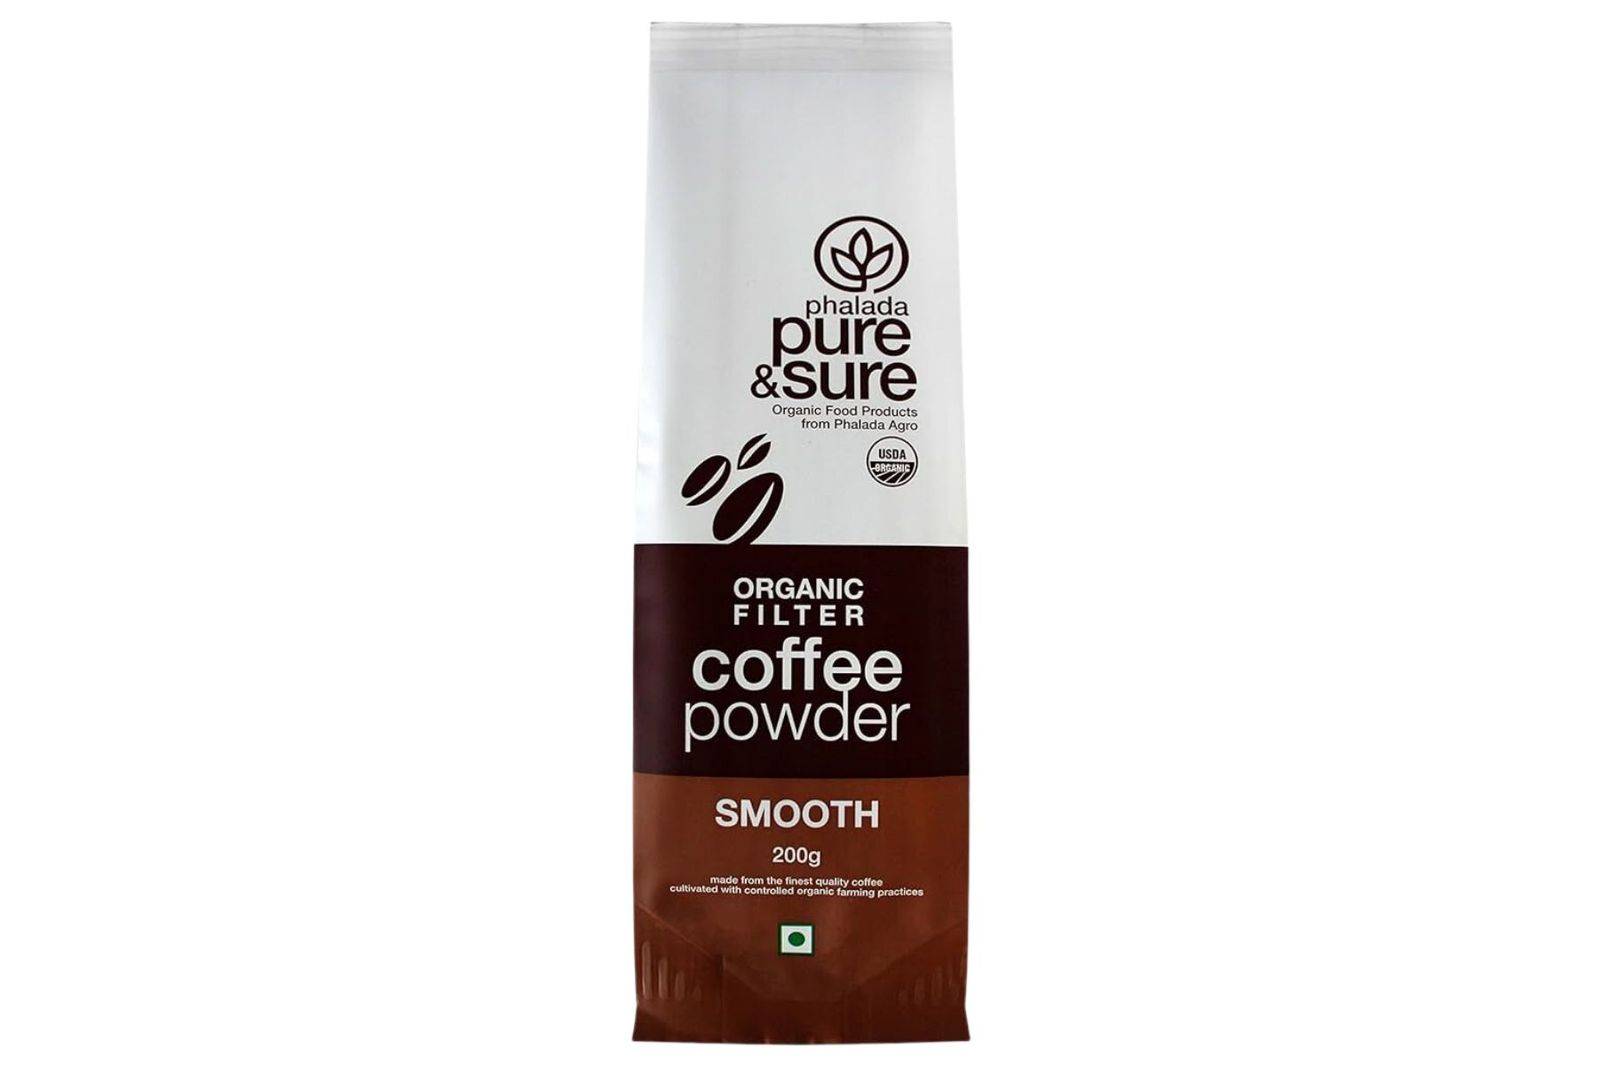 Pure & Sure Organic Filter Coffee Powder Smooth